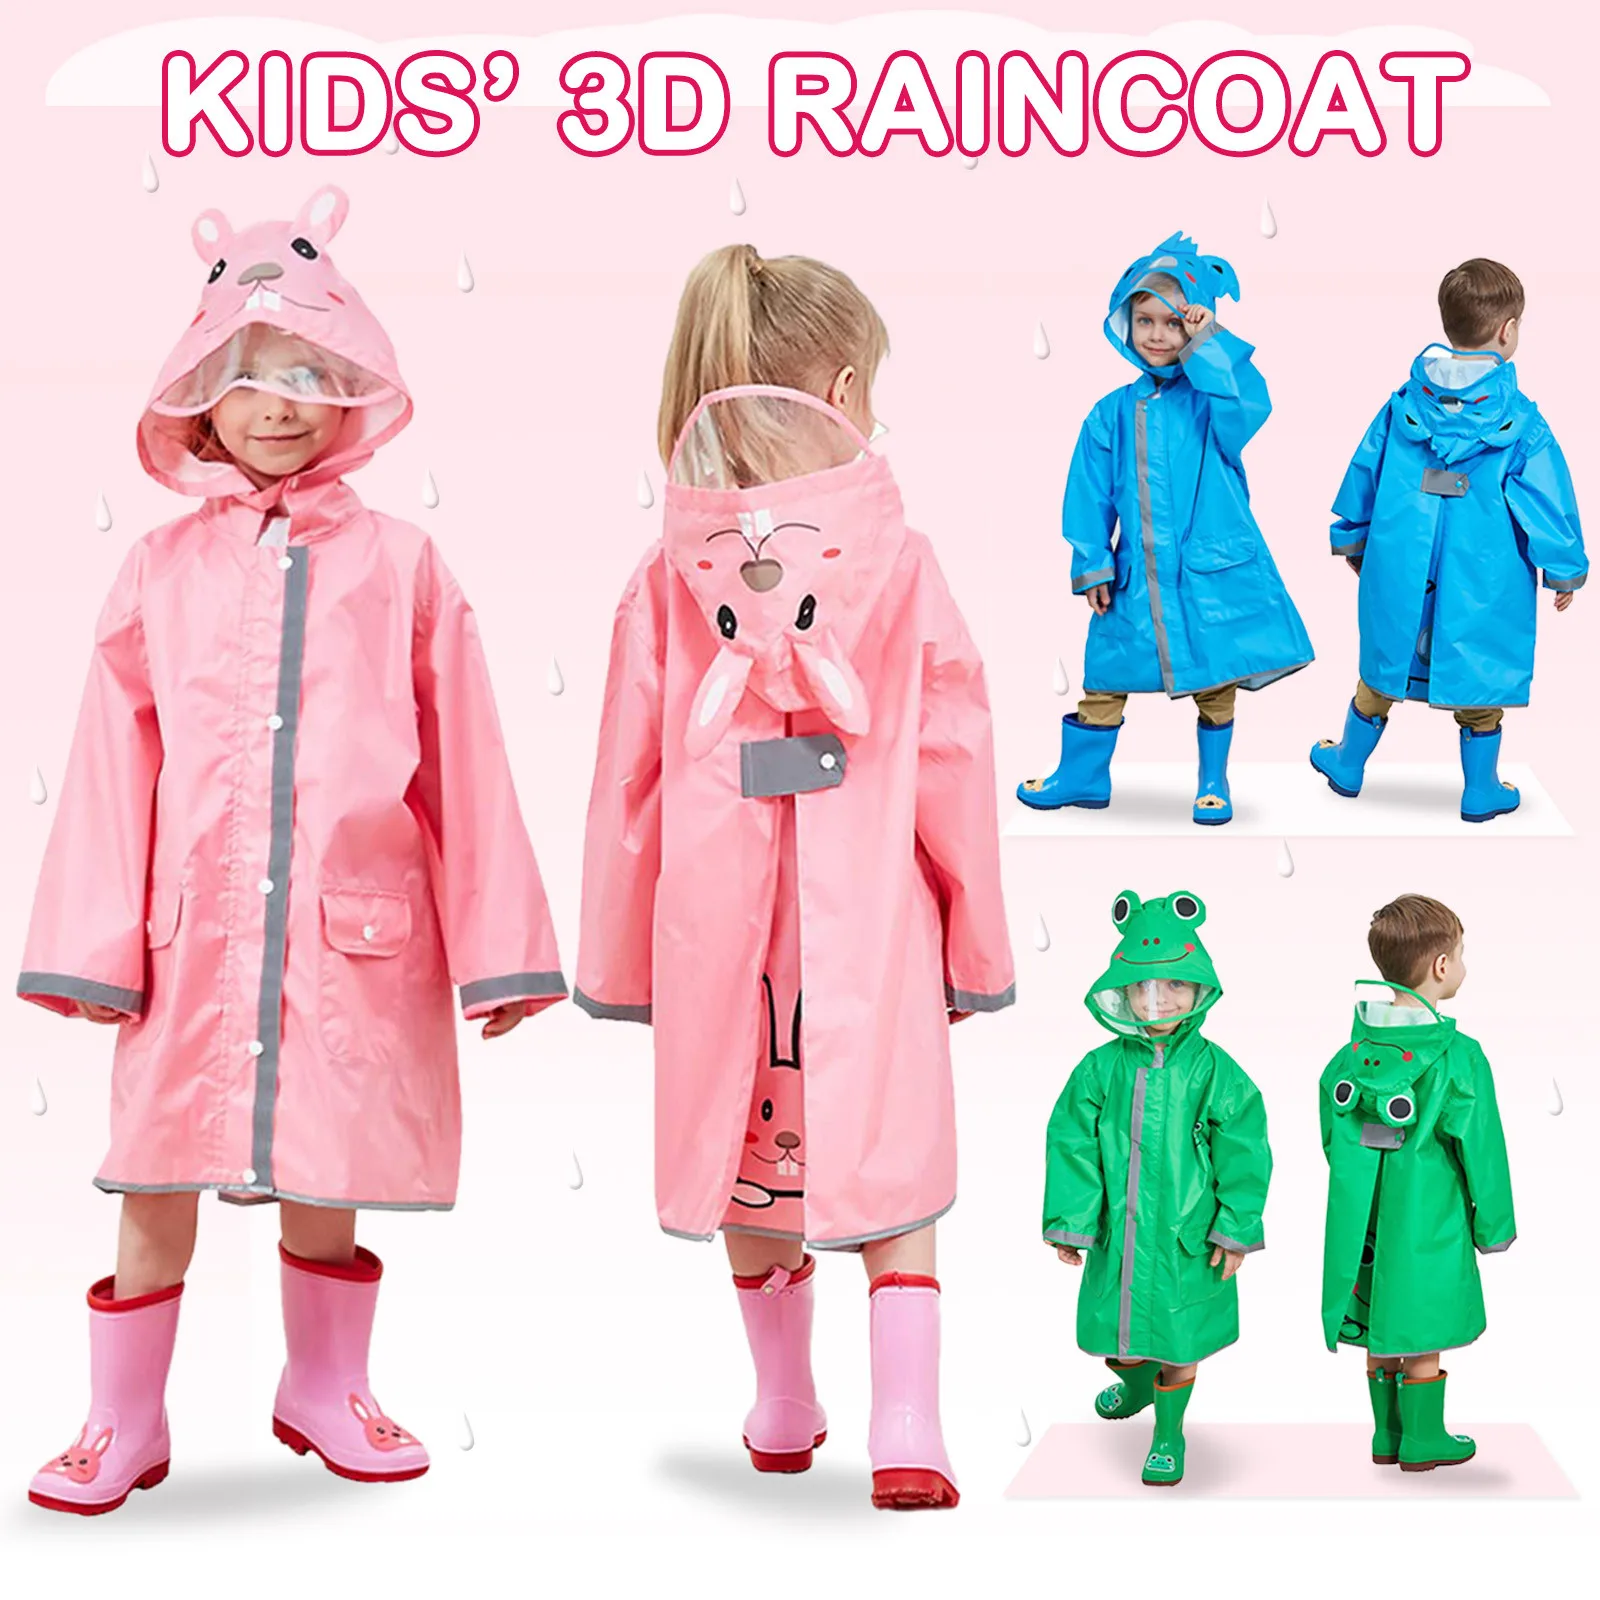 fajwskjw Kids Raincoat Cartoon Rainwear Printed Raincoat Waterproof Hooded Rain Ponchos for Girls and Boys Cute 3D Cartoon Pattern Rabbit Frog Koala Shaped 